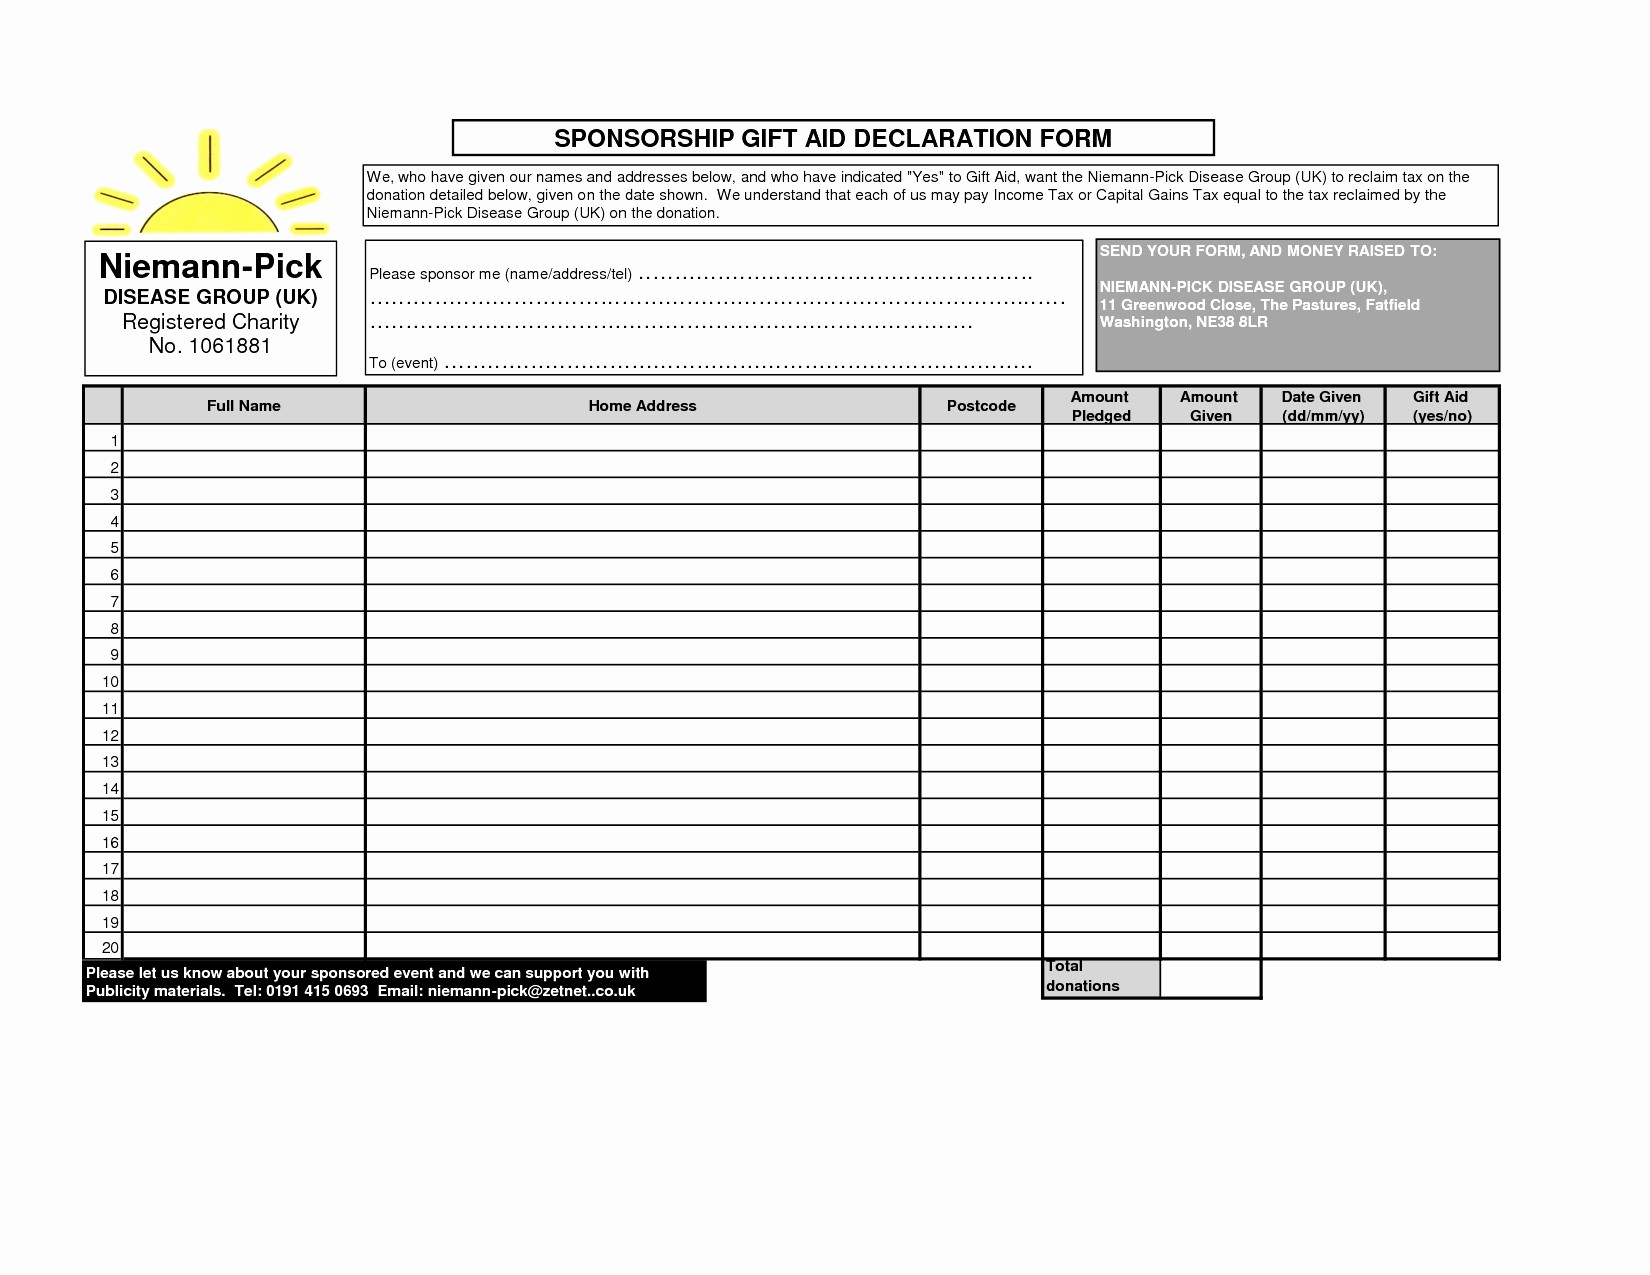 Lularoe Spreadsheet Free Inspirational Spreadsheets For Document Ezpz